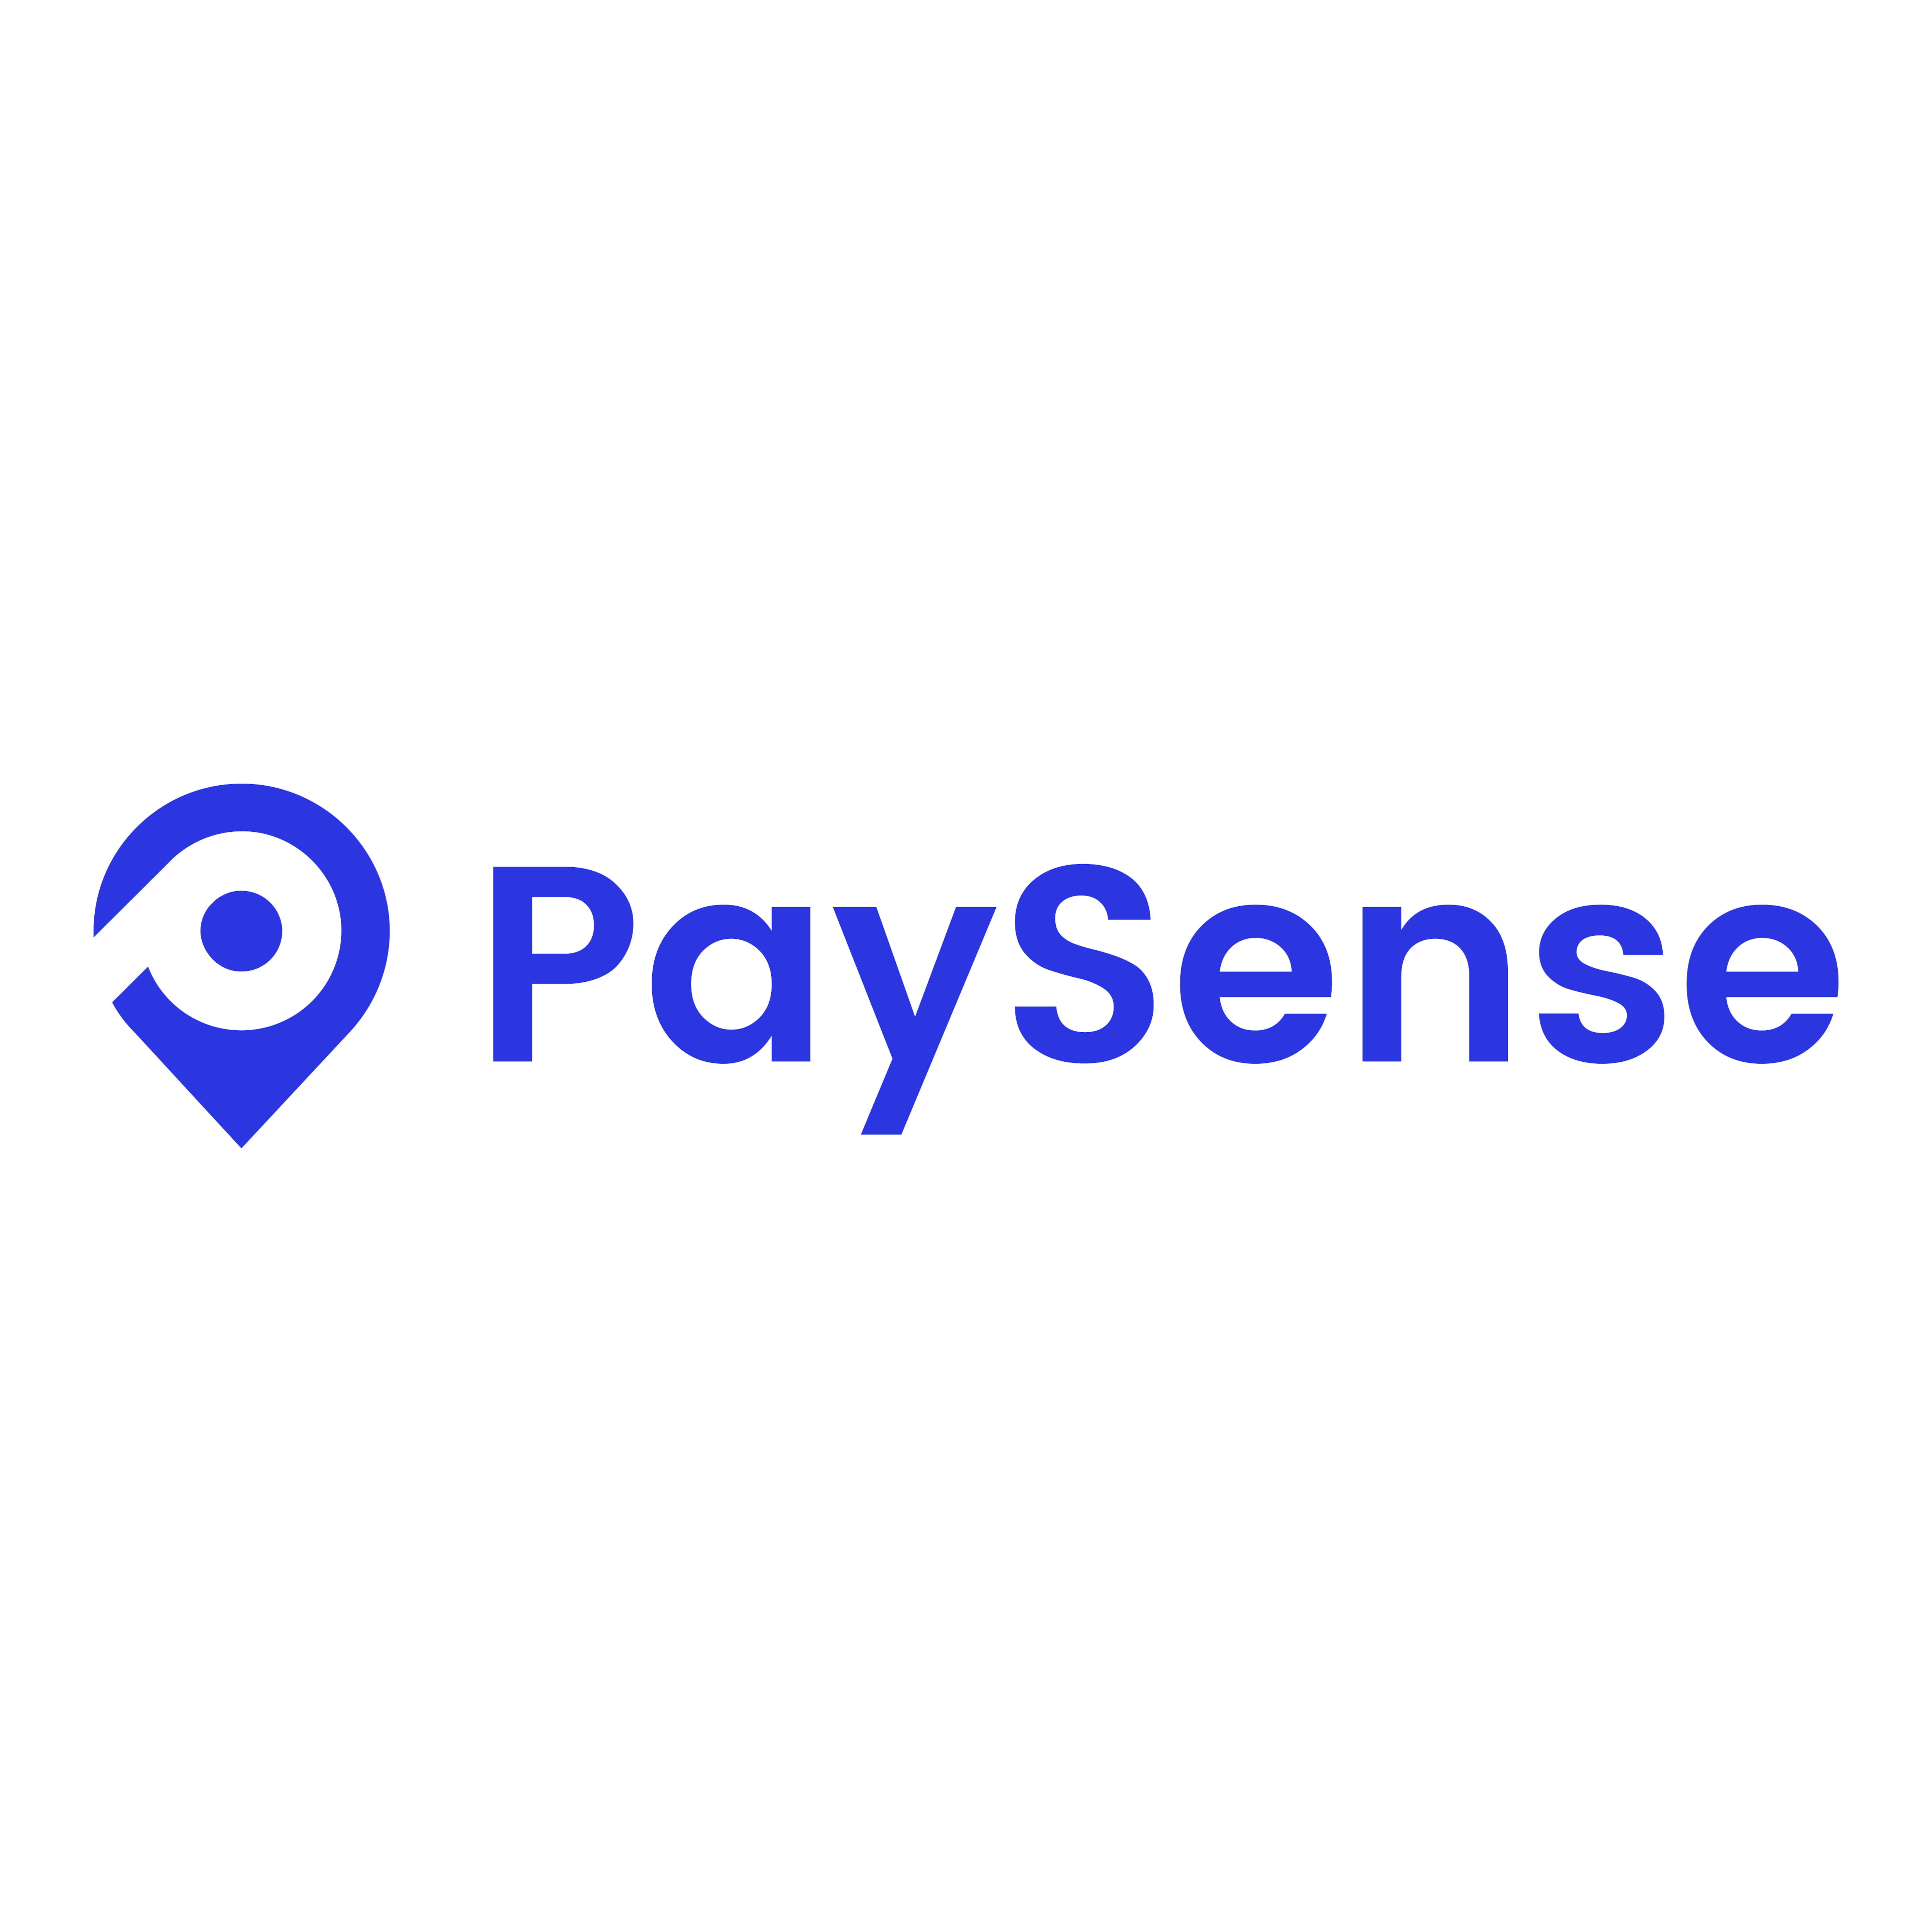 PaySense Partners